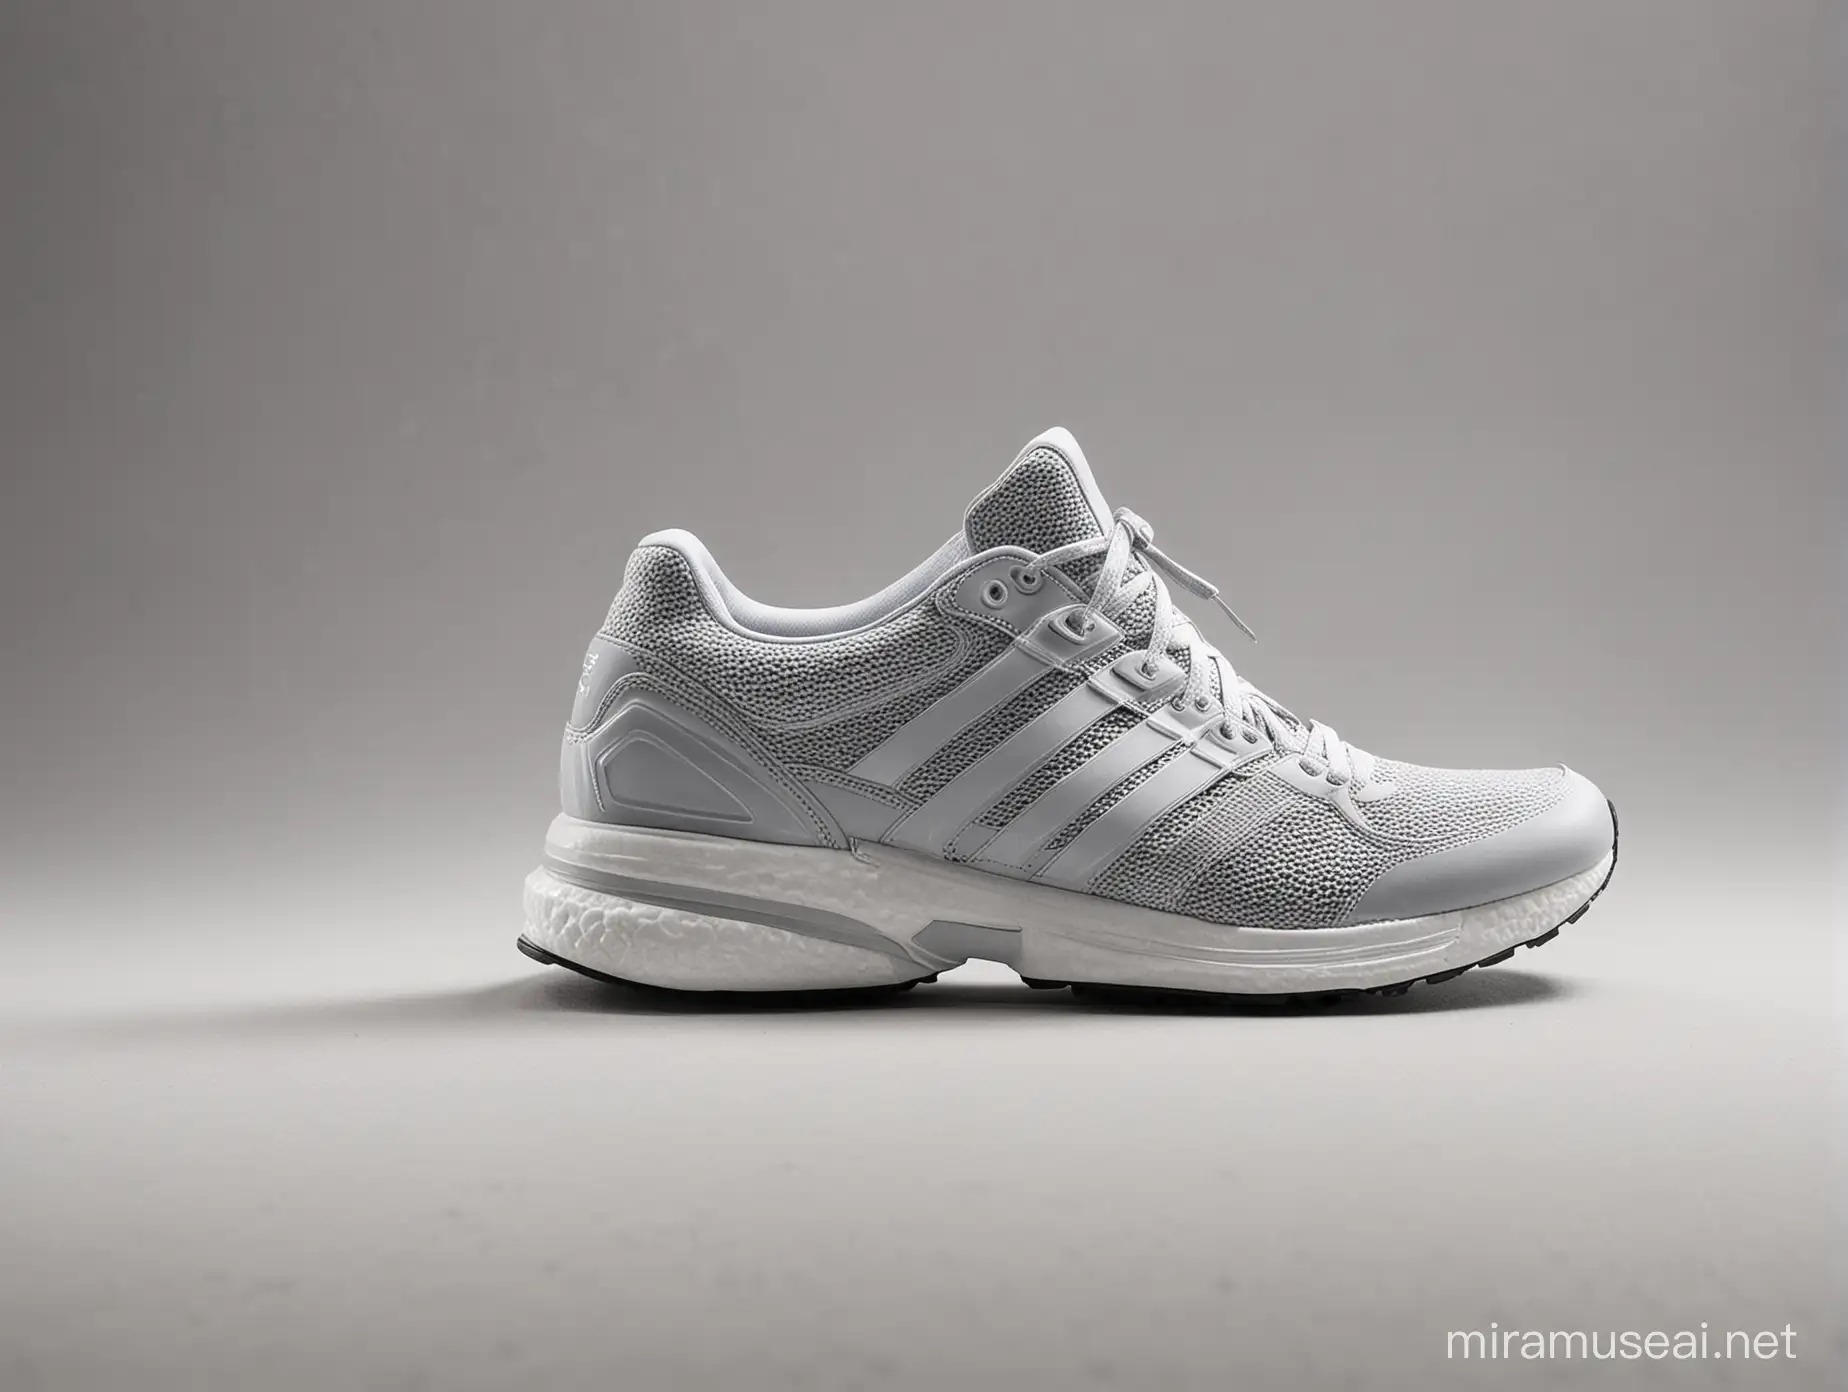 Adidas Running Shoes on Light Grey Background